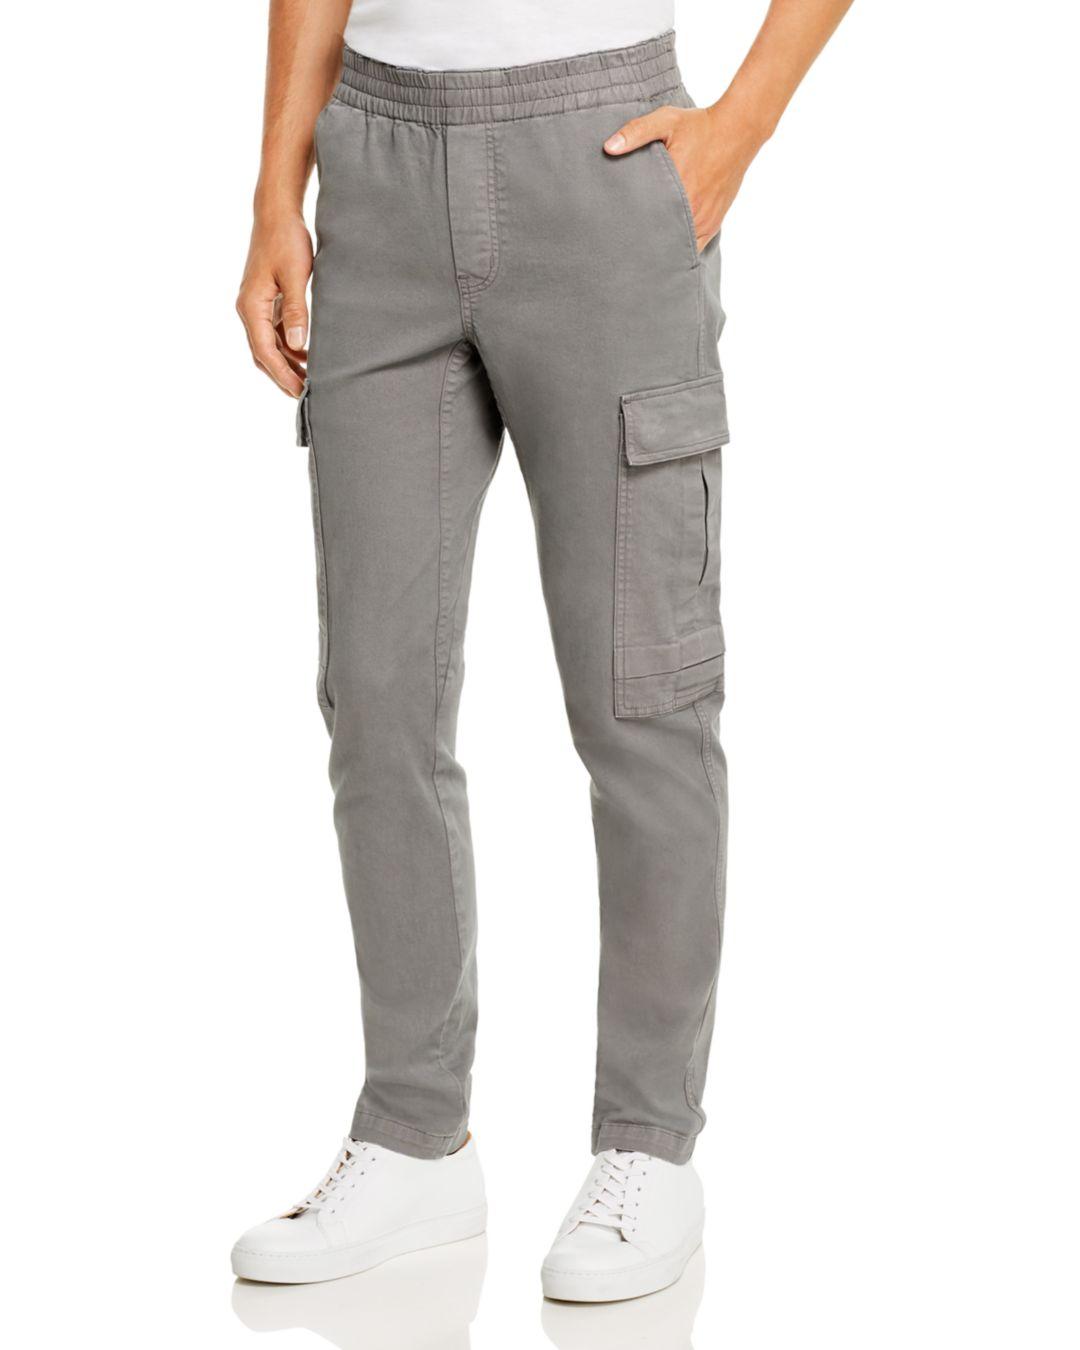 J Brand Cotton Fenix Regular Fit Cargo Pants in Gray for Men - Lyst